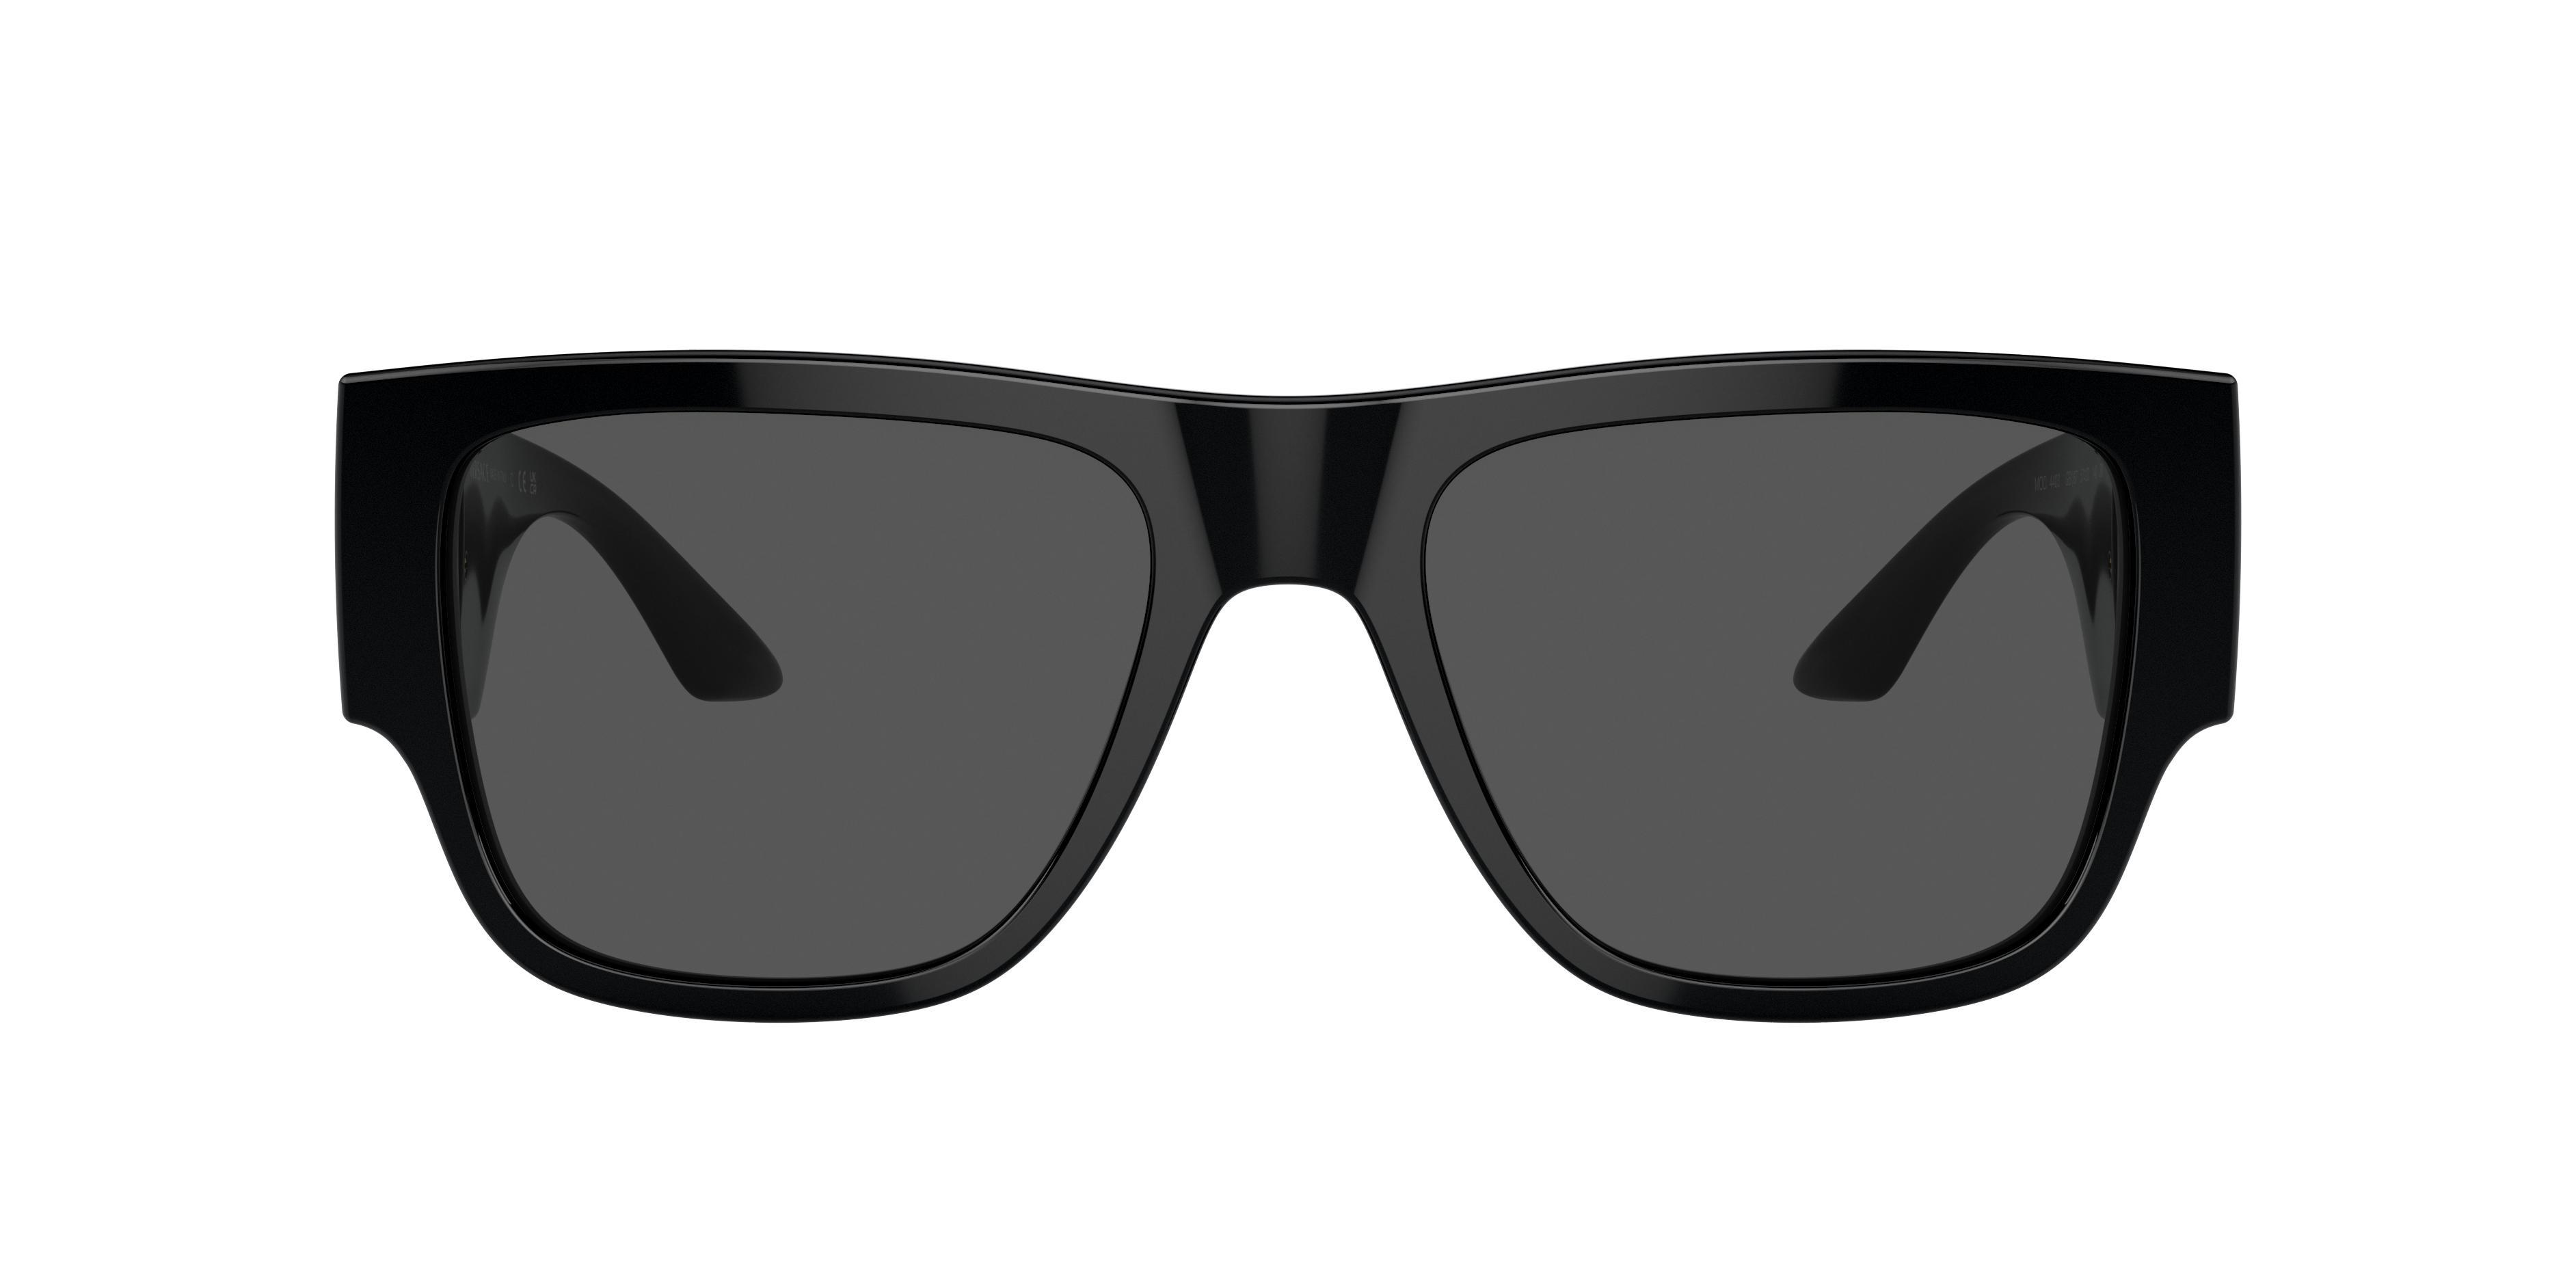 Versace 57mm Rectangular Sunglasses Product Image